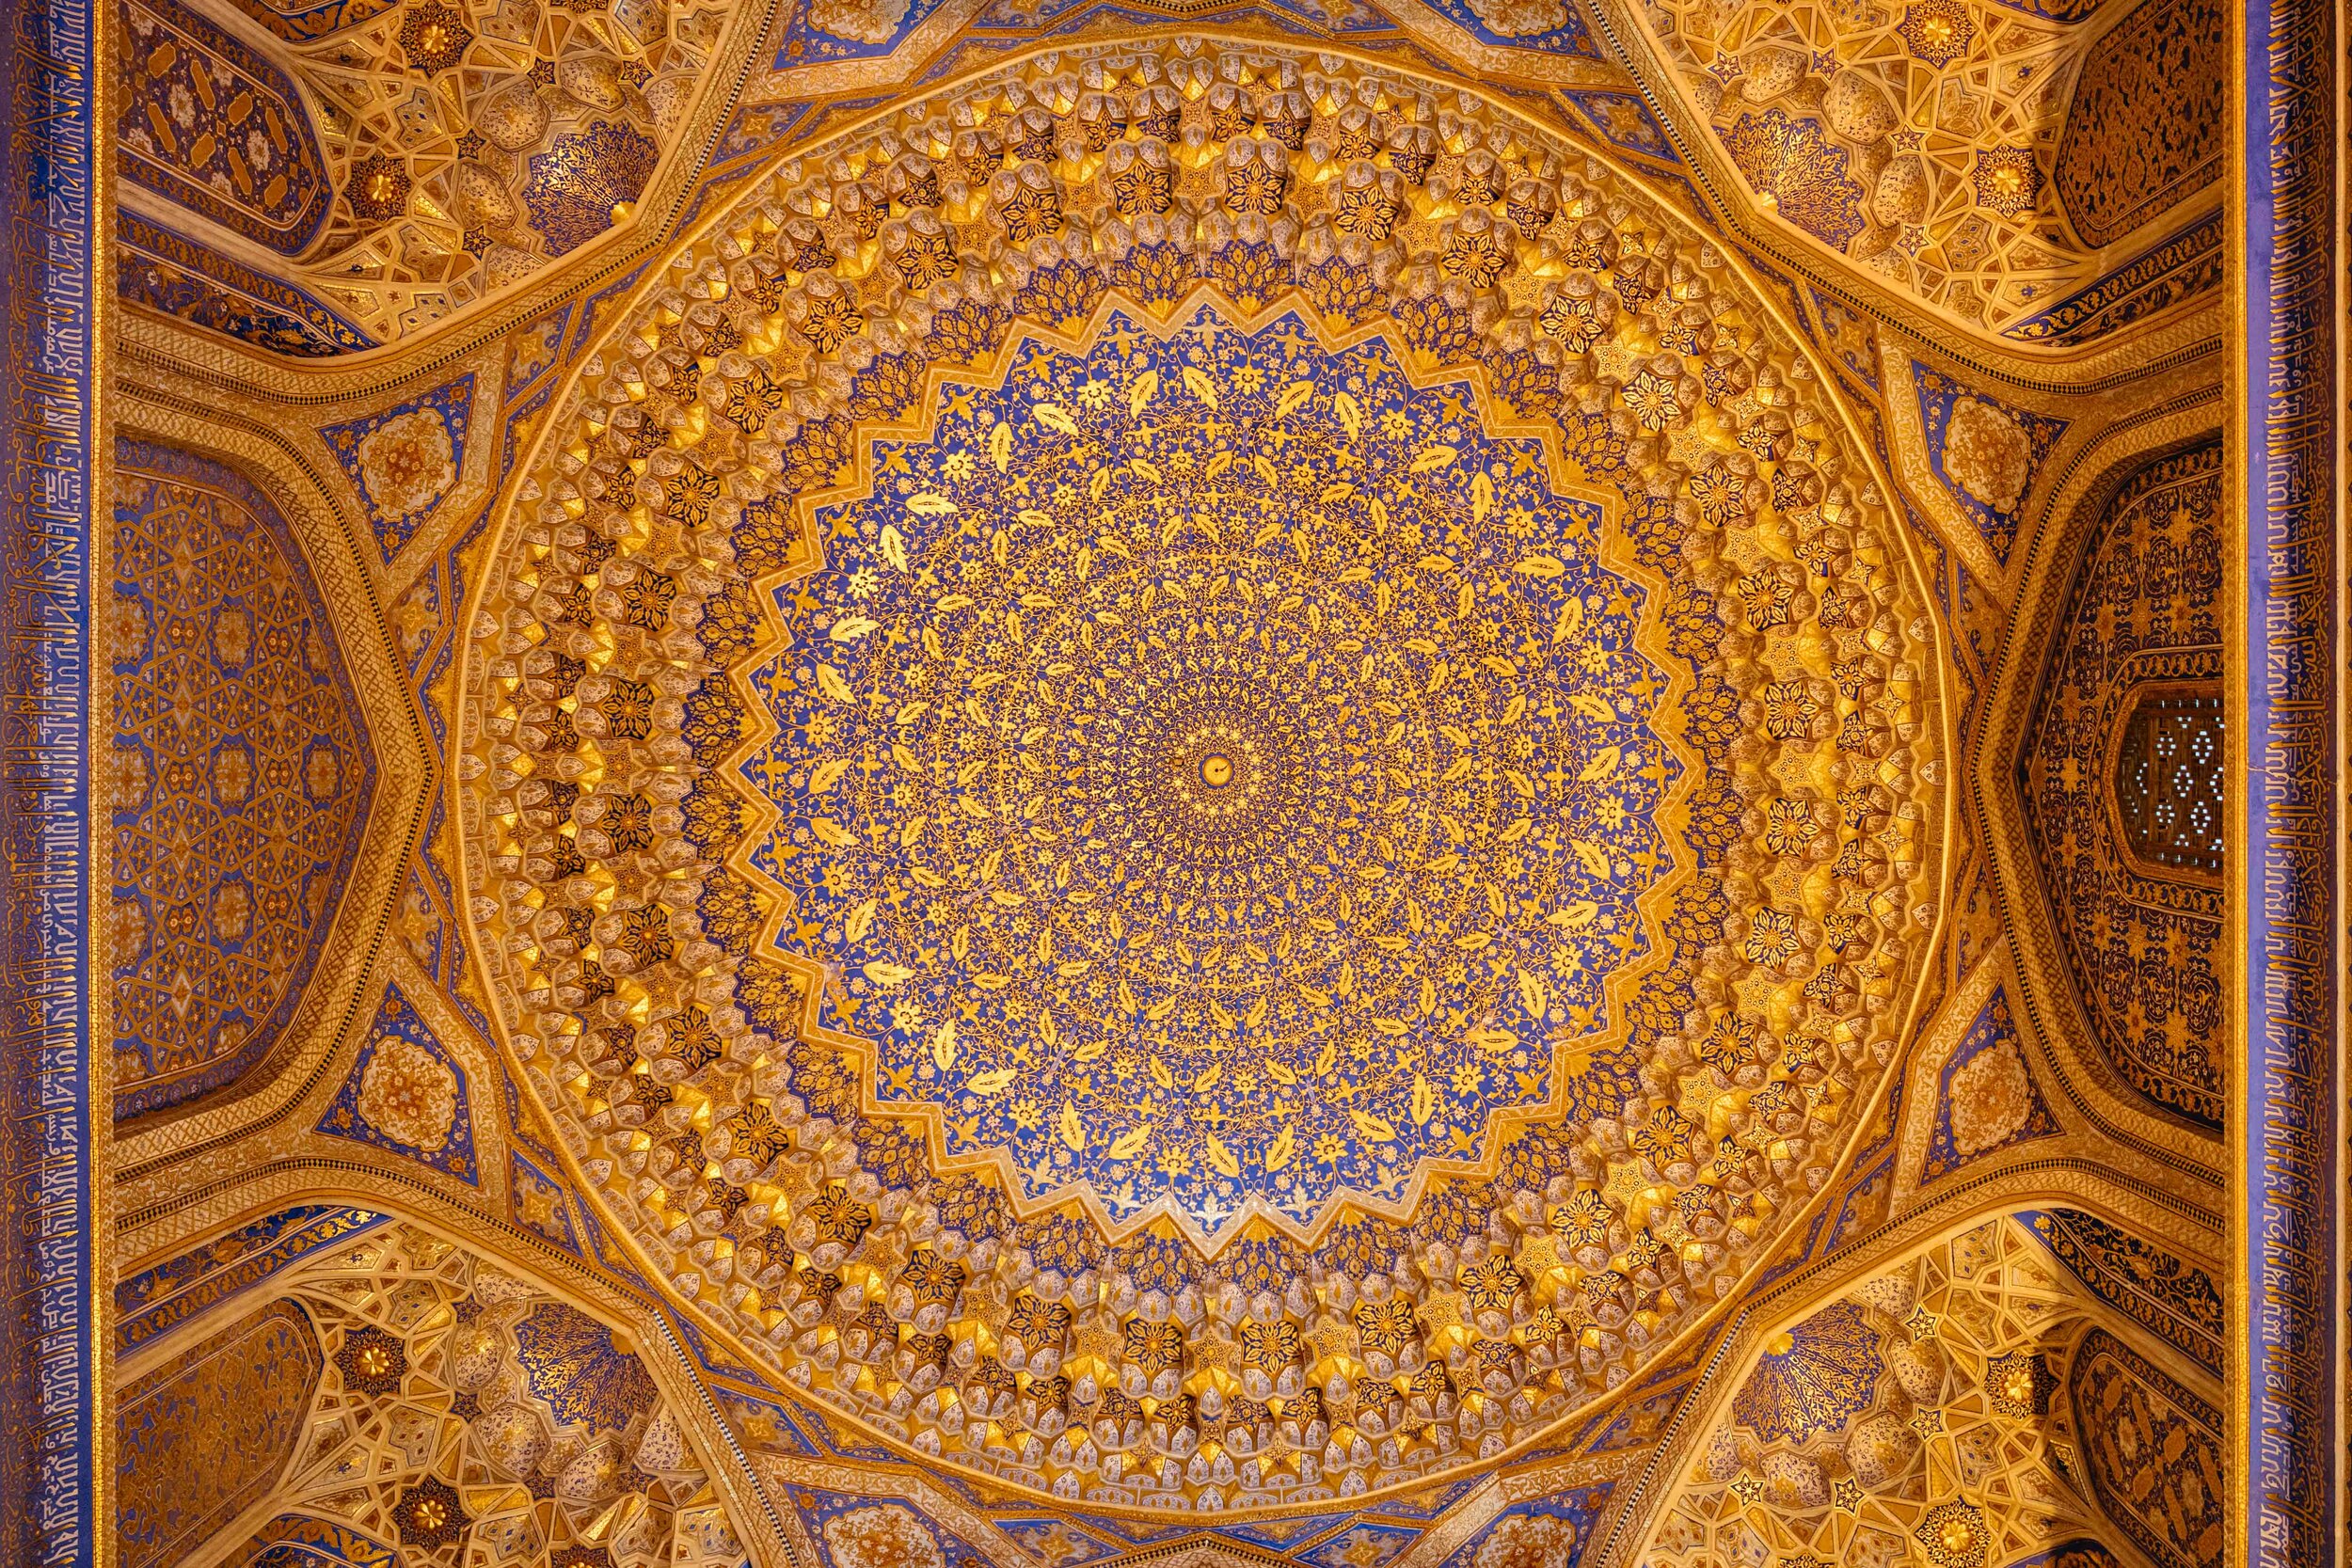  Ceiling details from the Tilya-Kori Madrasah 